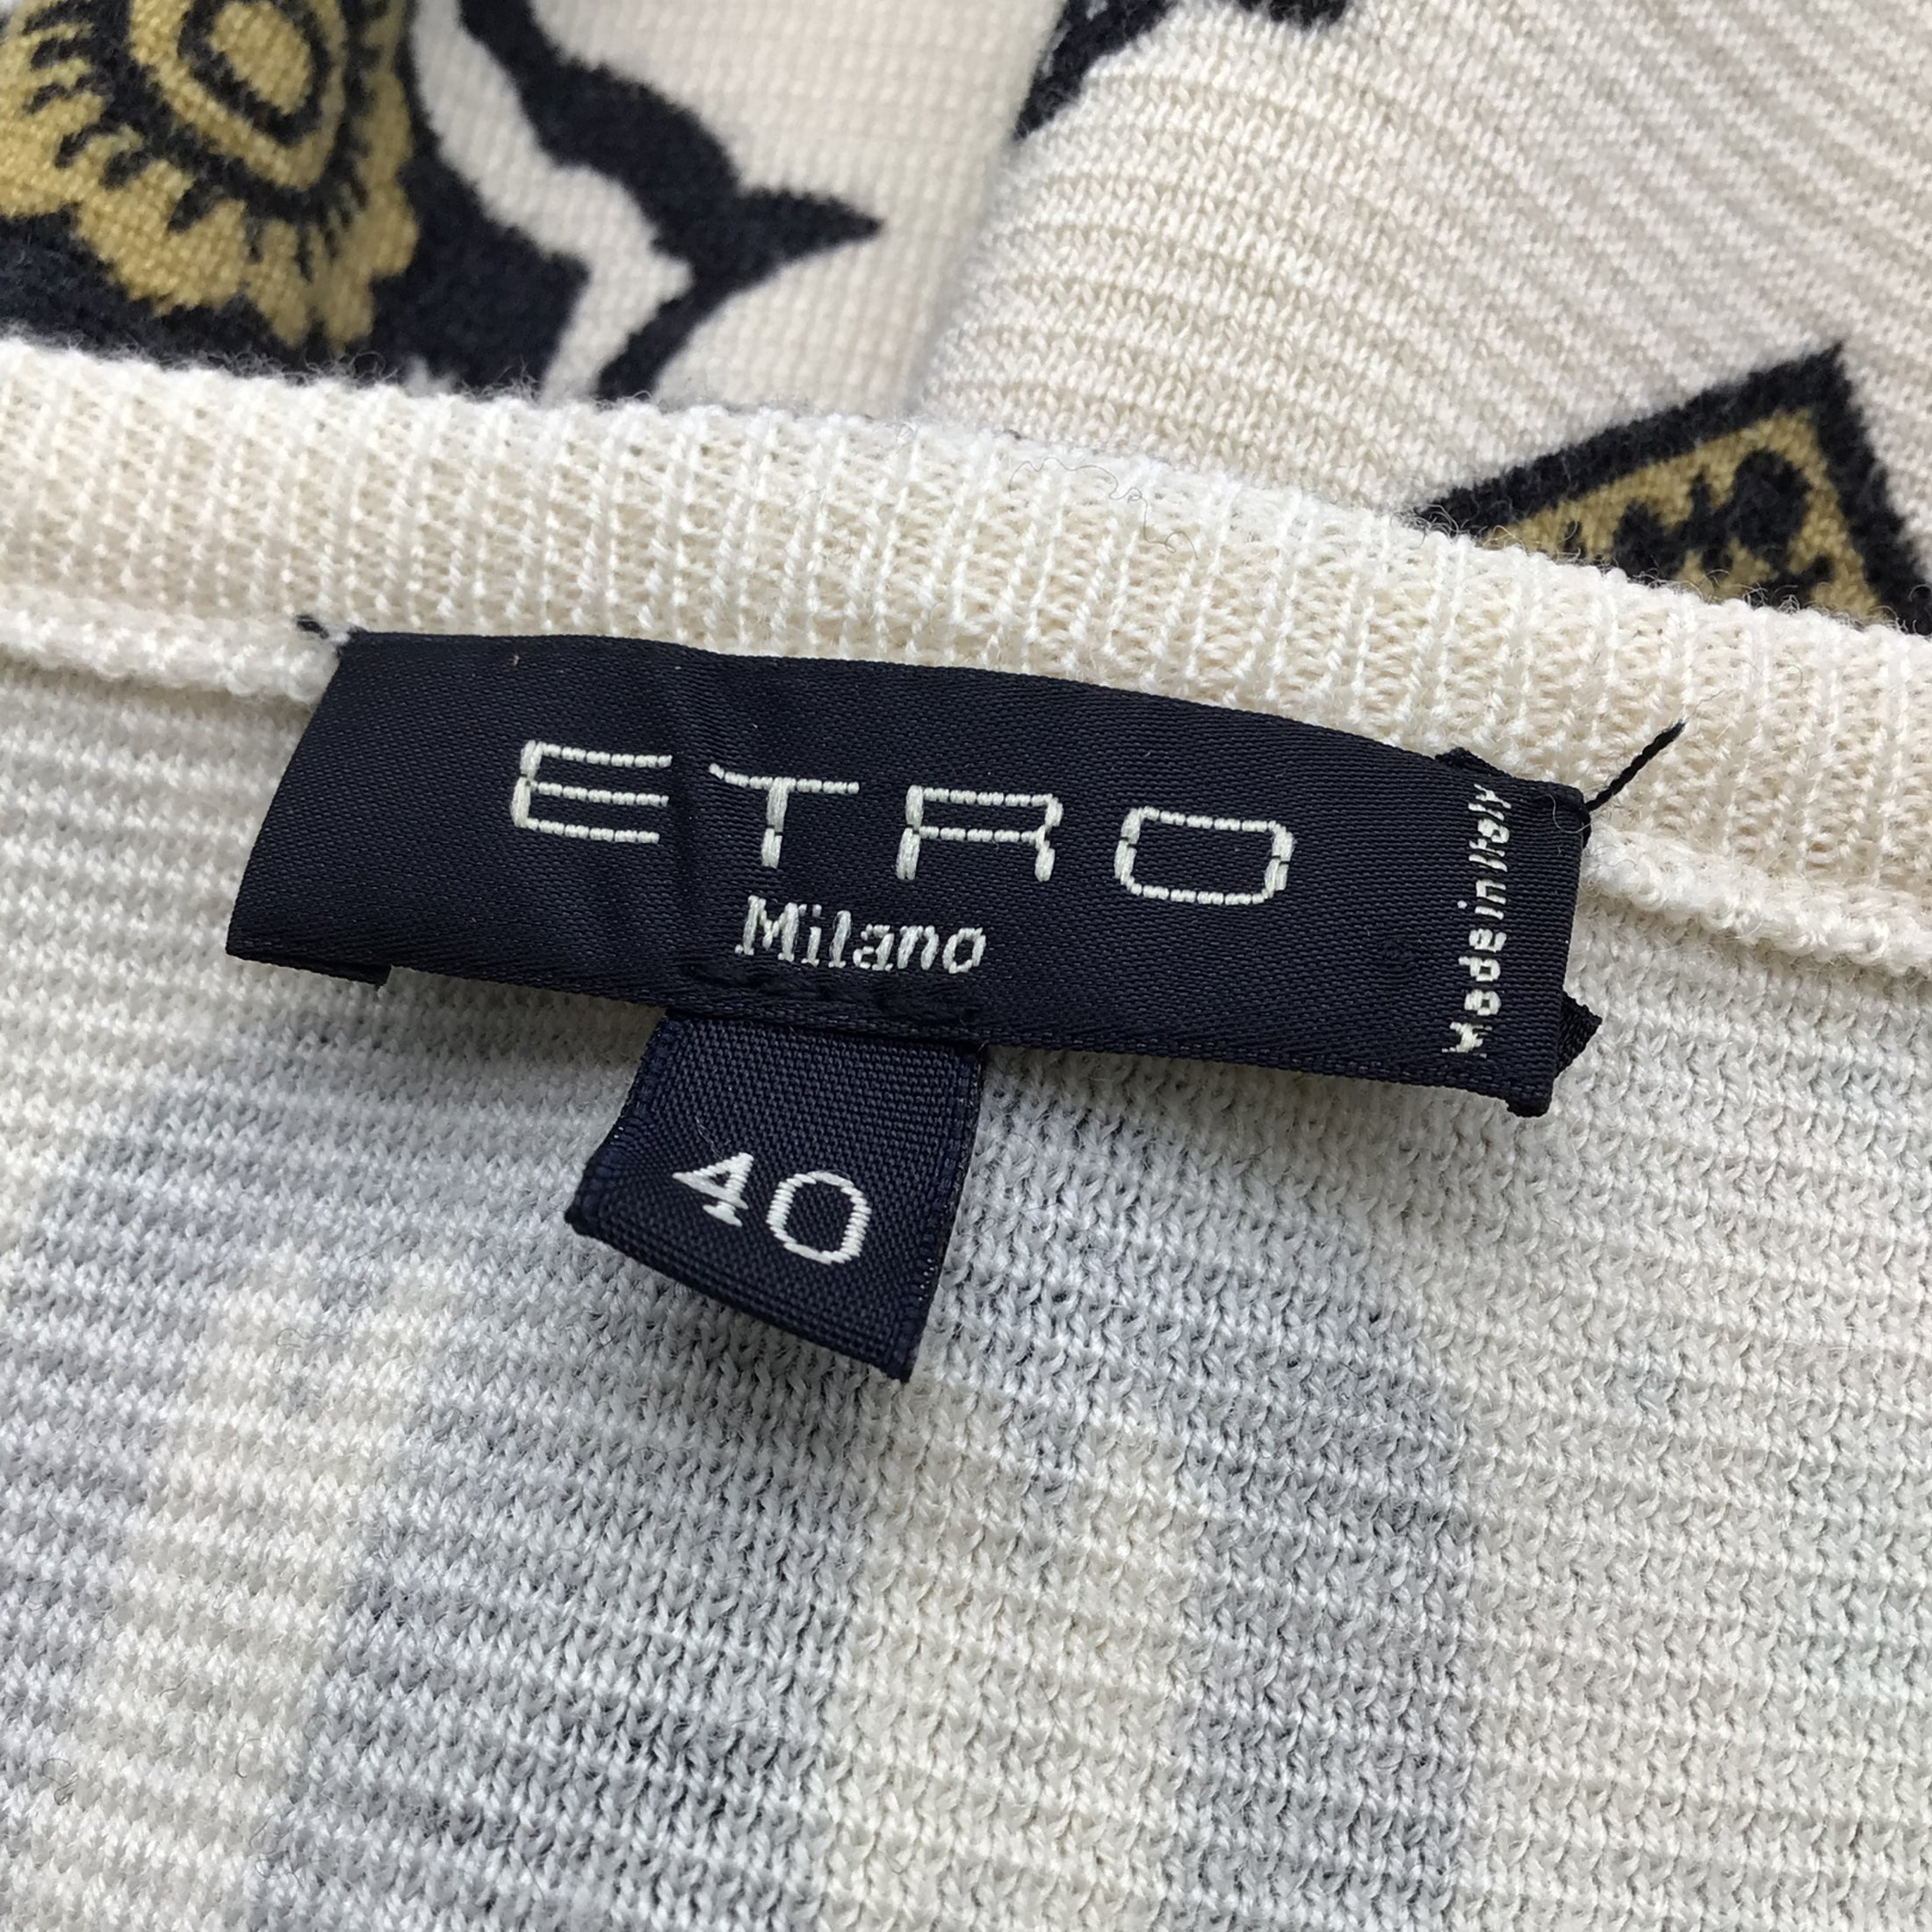 Etro Black / Cream / Teal Paisley Printed Short Sleeved Knit Dress